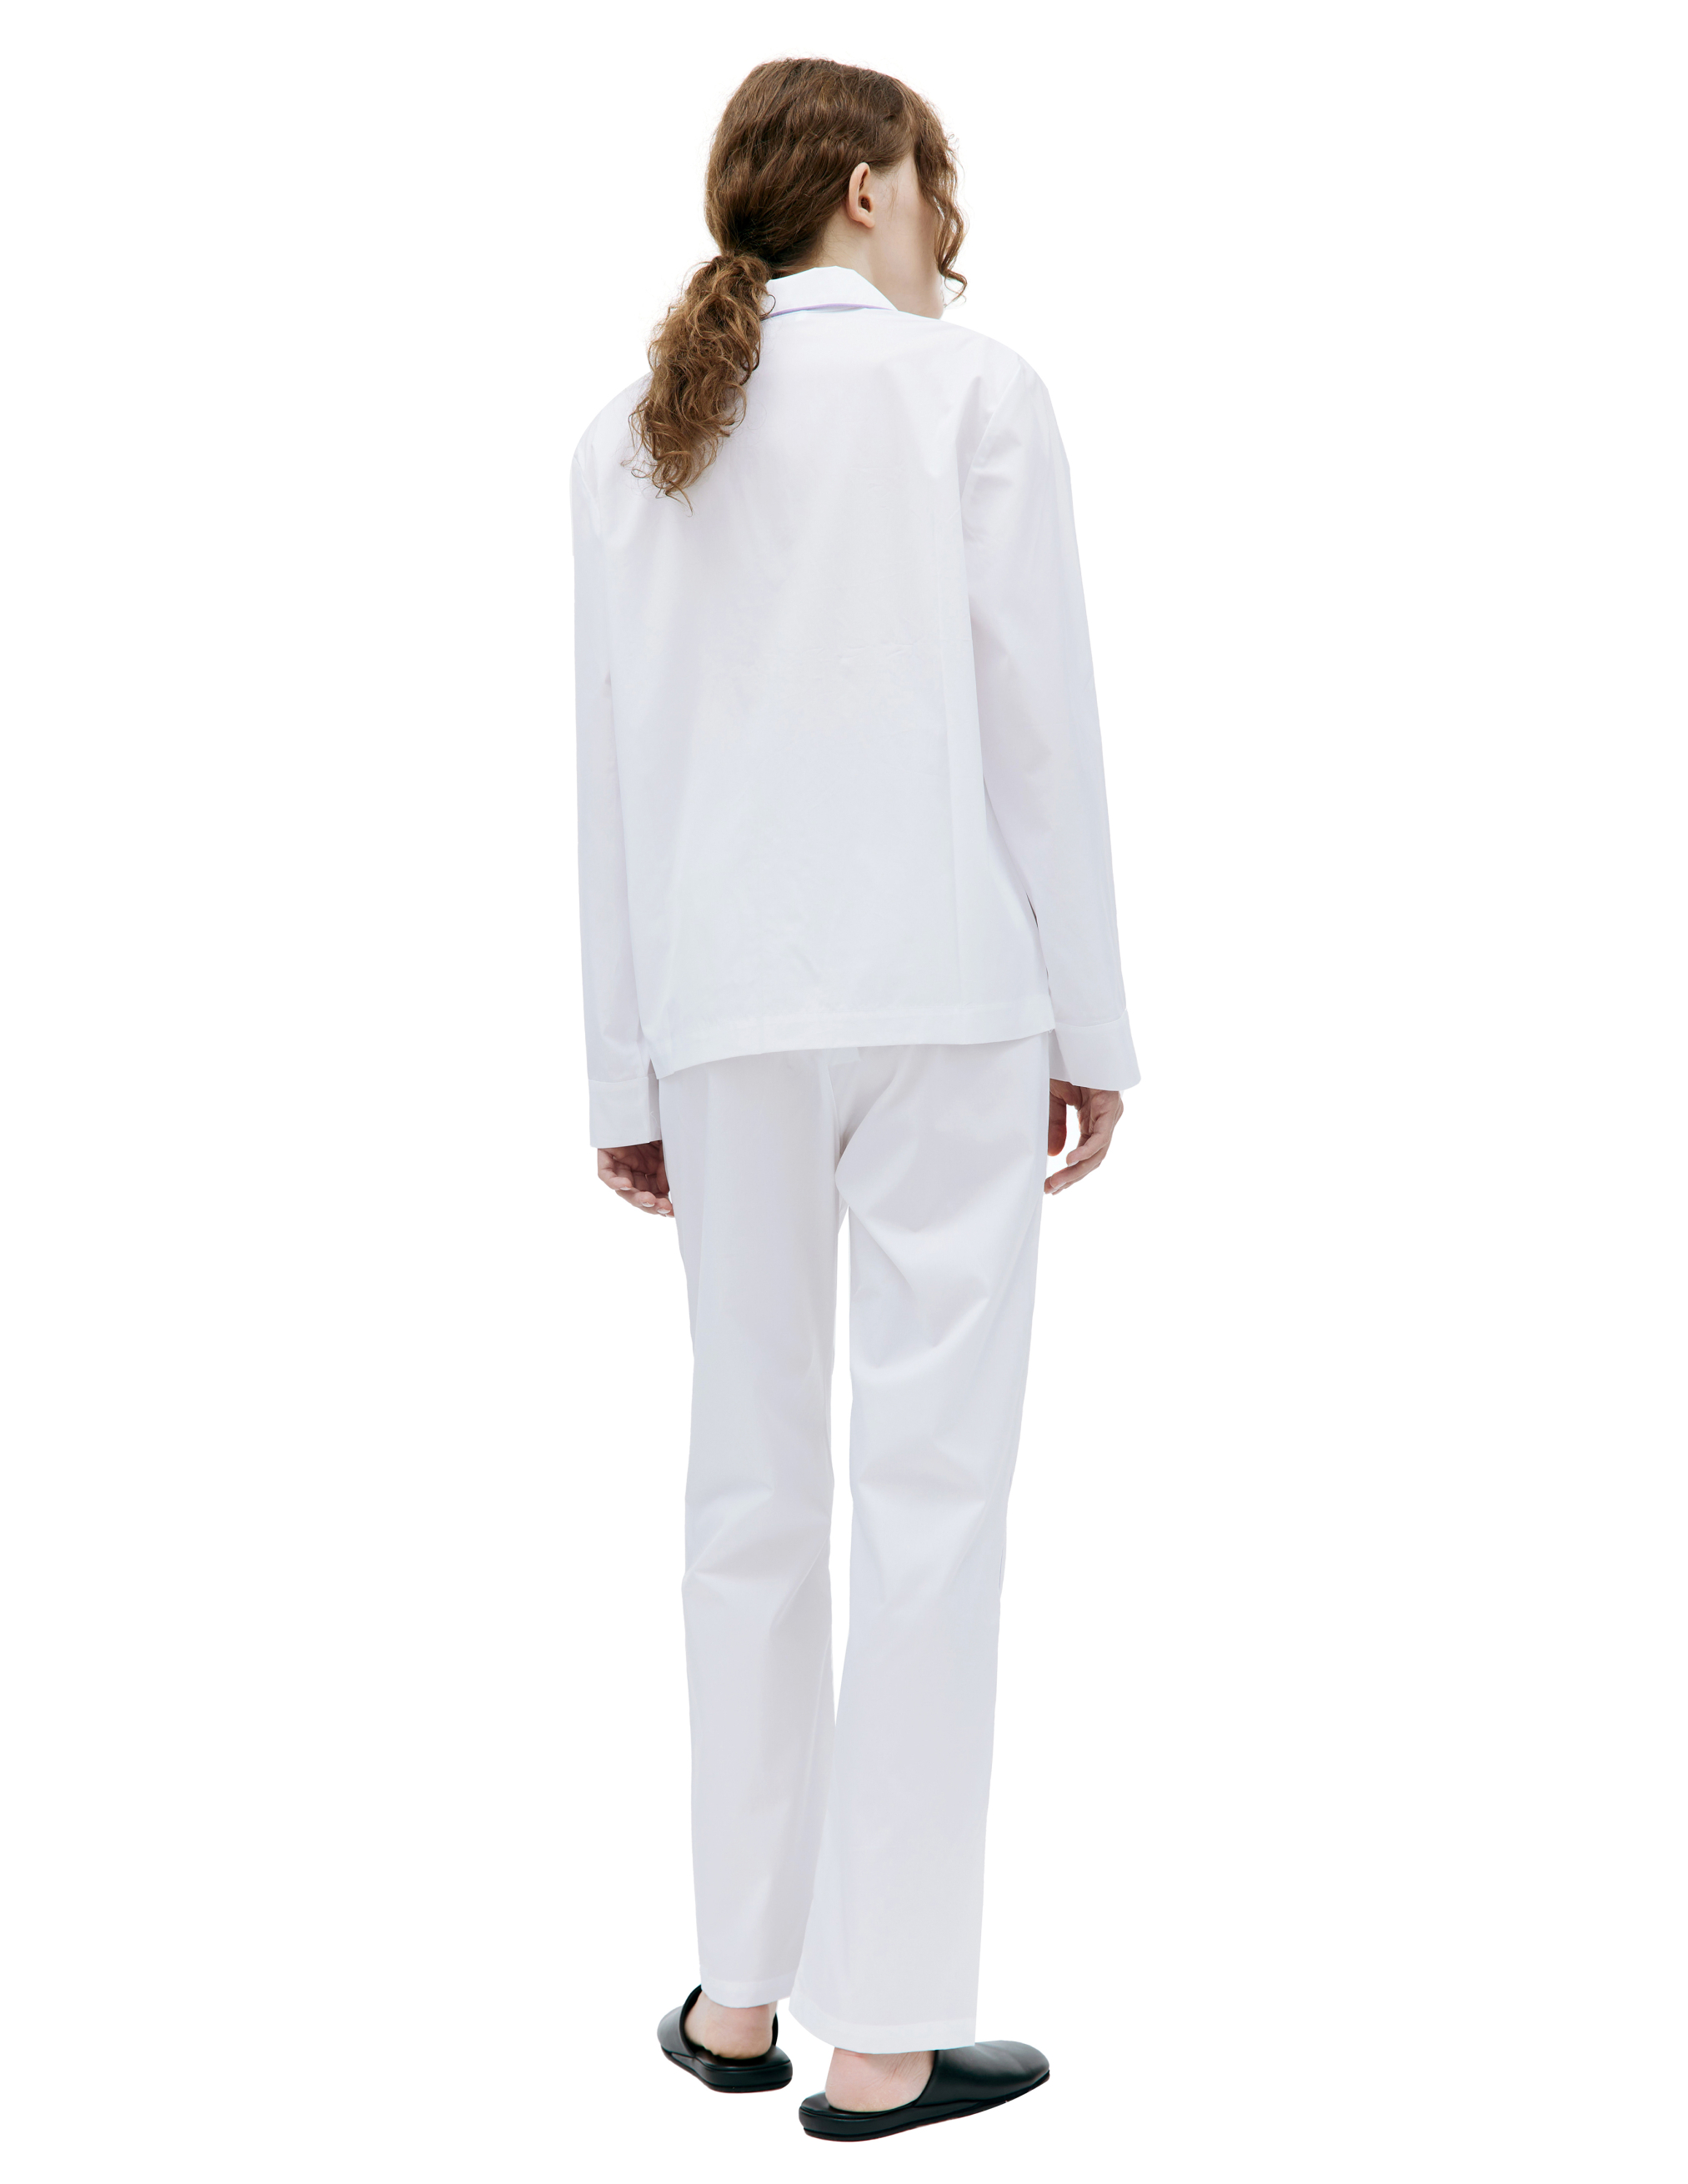 Пижамная рубашка Serif SPORTY & RICH PJ1015WH, размер S;M;L;XL - фото 3